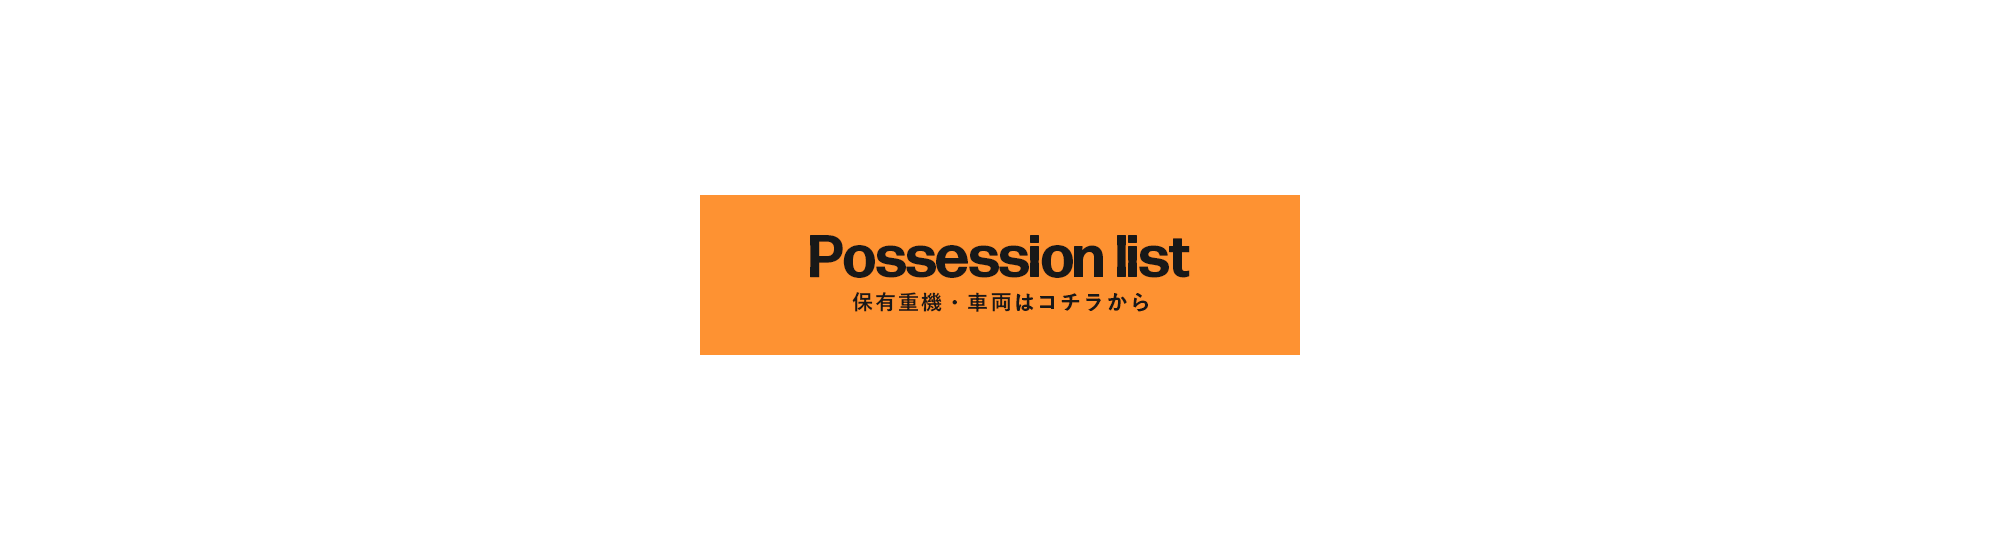 possession_list_banner